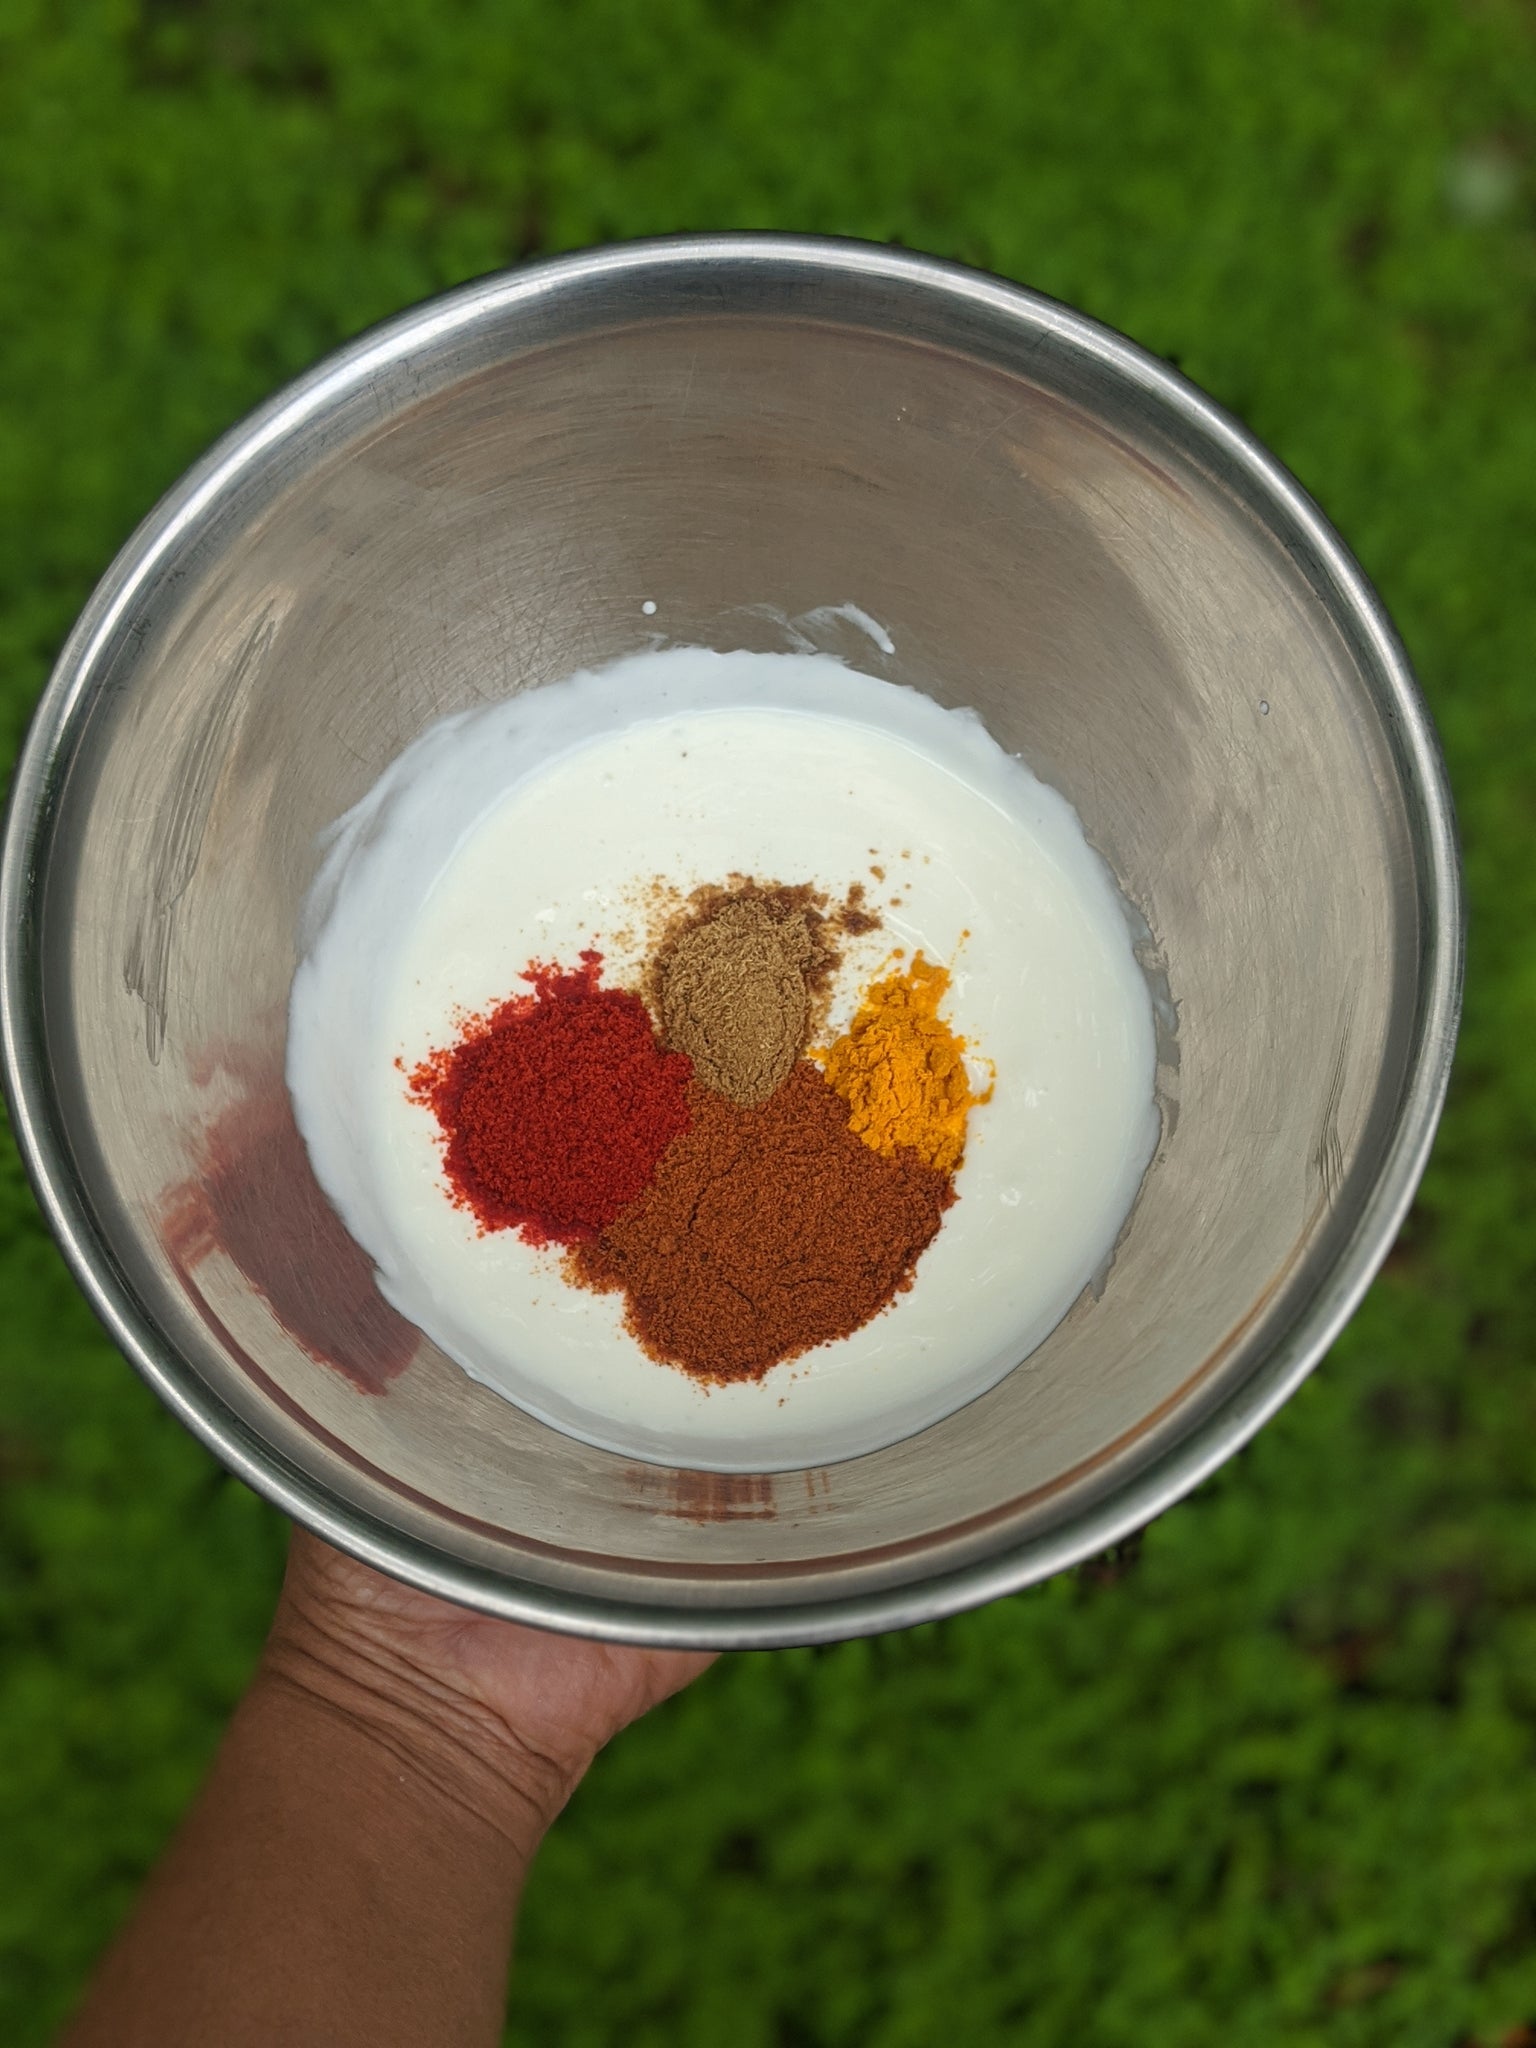 SpiceFix cumin powder, turmeric powder, and Kashmiri red chili powder is added to a bowl of plain yogurt